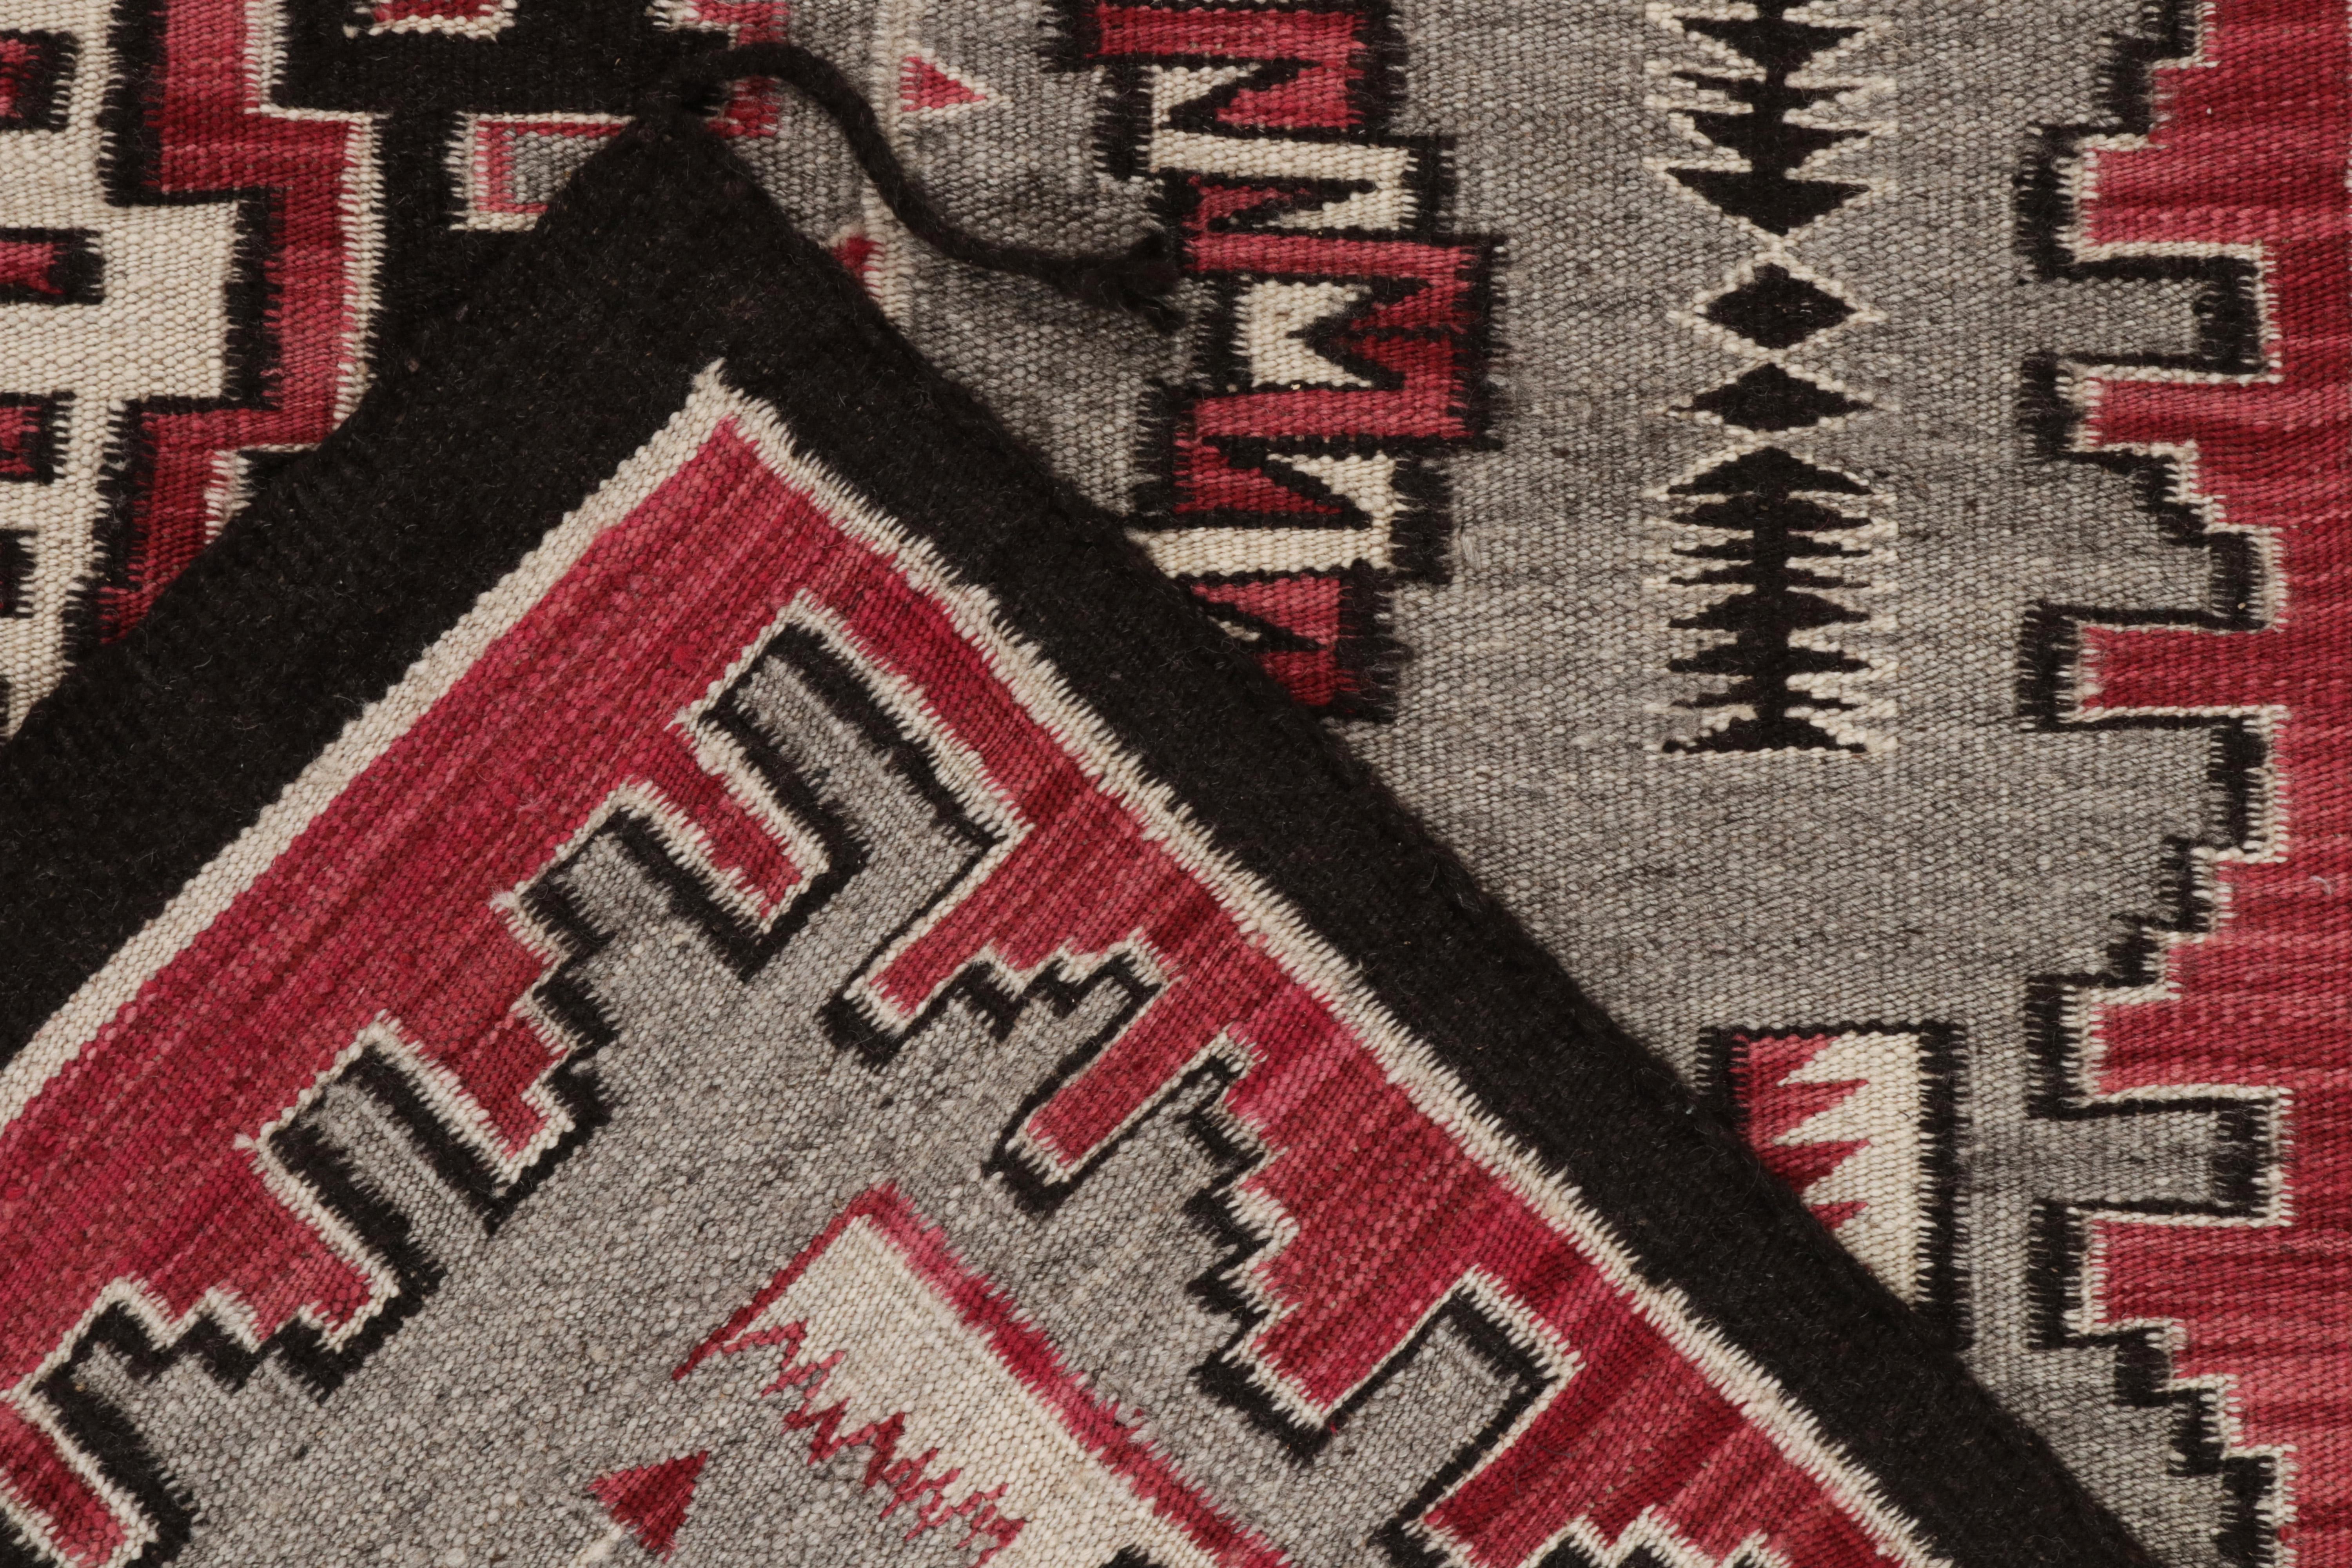 Wool Rug & Kilim's Navajo Tribal Kilim Style Rug in Red Gray, Black Geometric Pattern For Sale